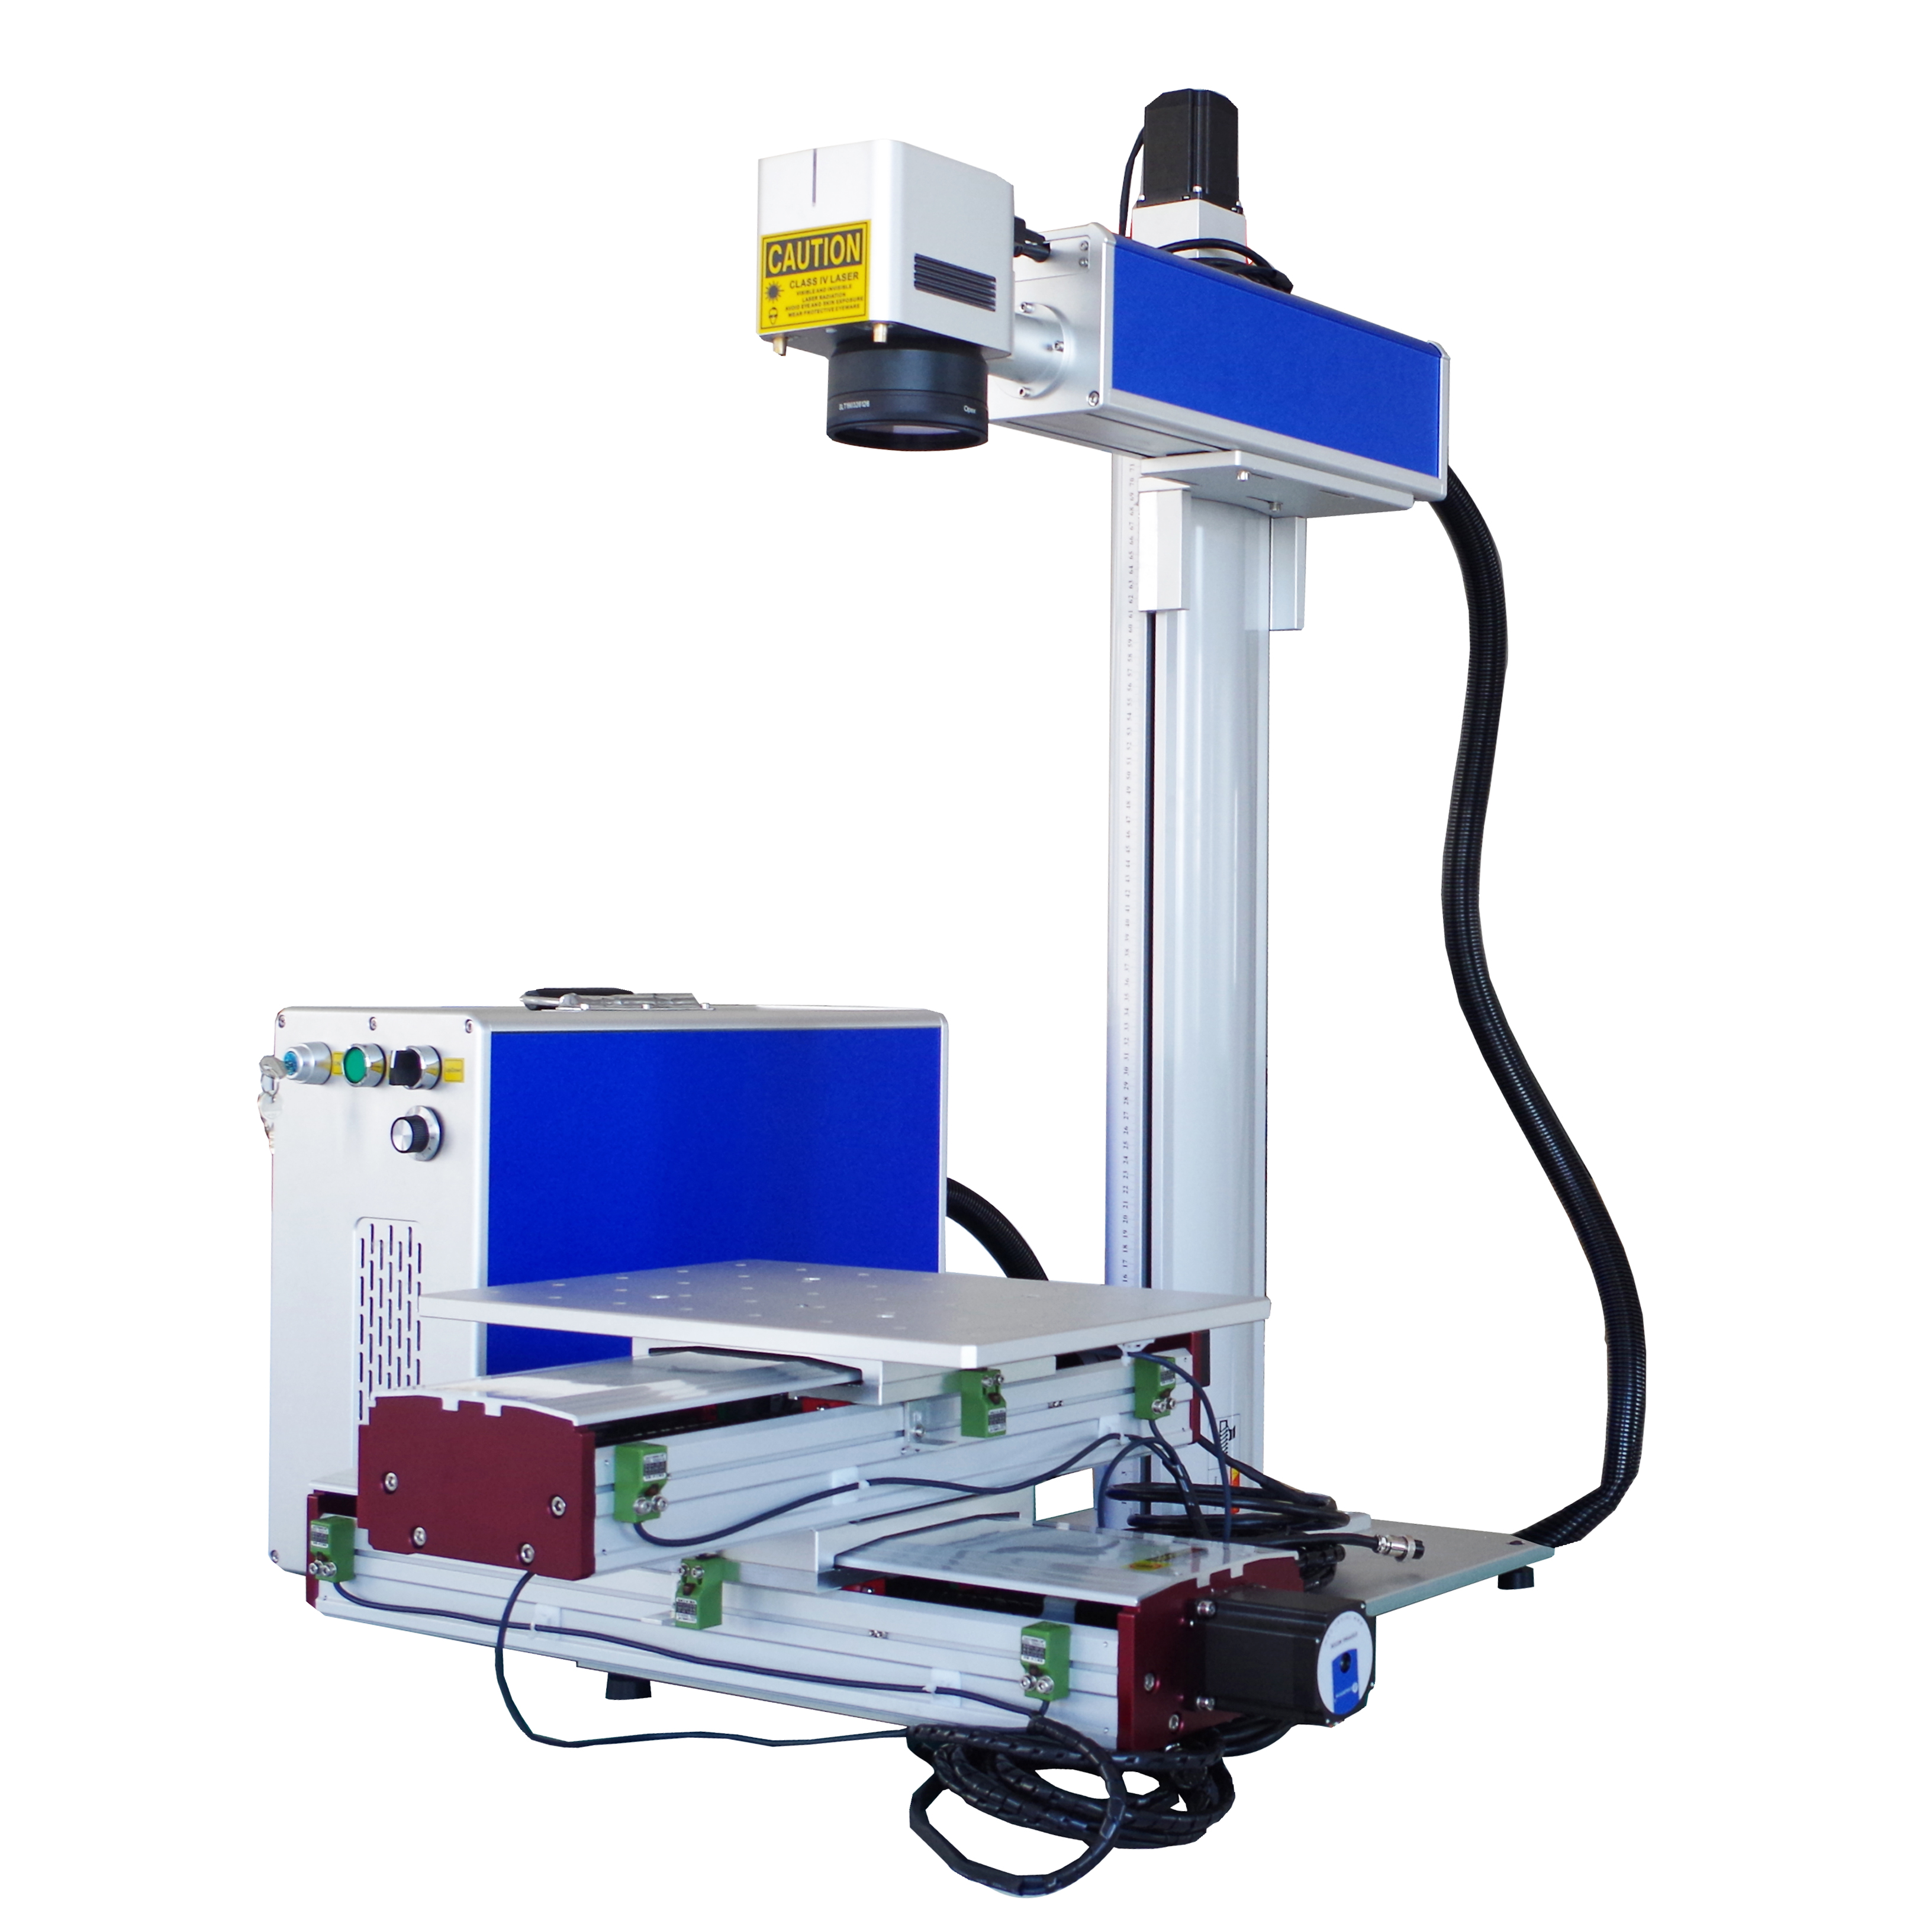 Fiber Laser Marking Machine Large Area Marking Stitching with XY Motorized Table